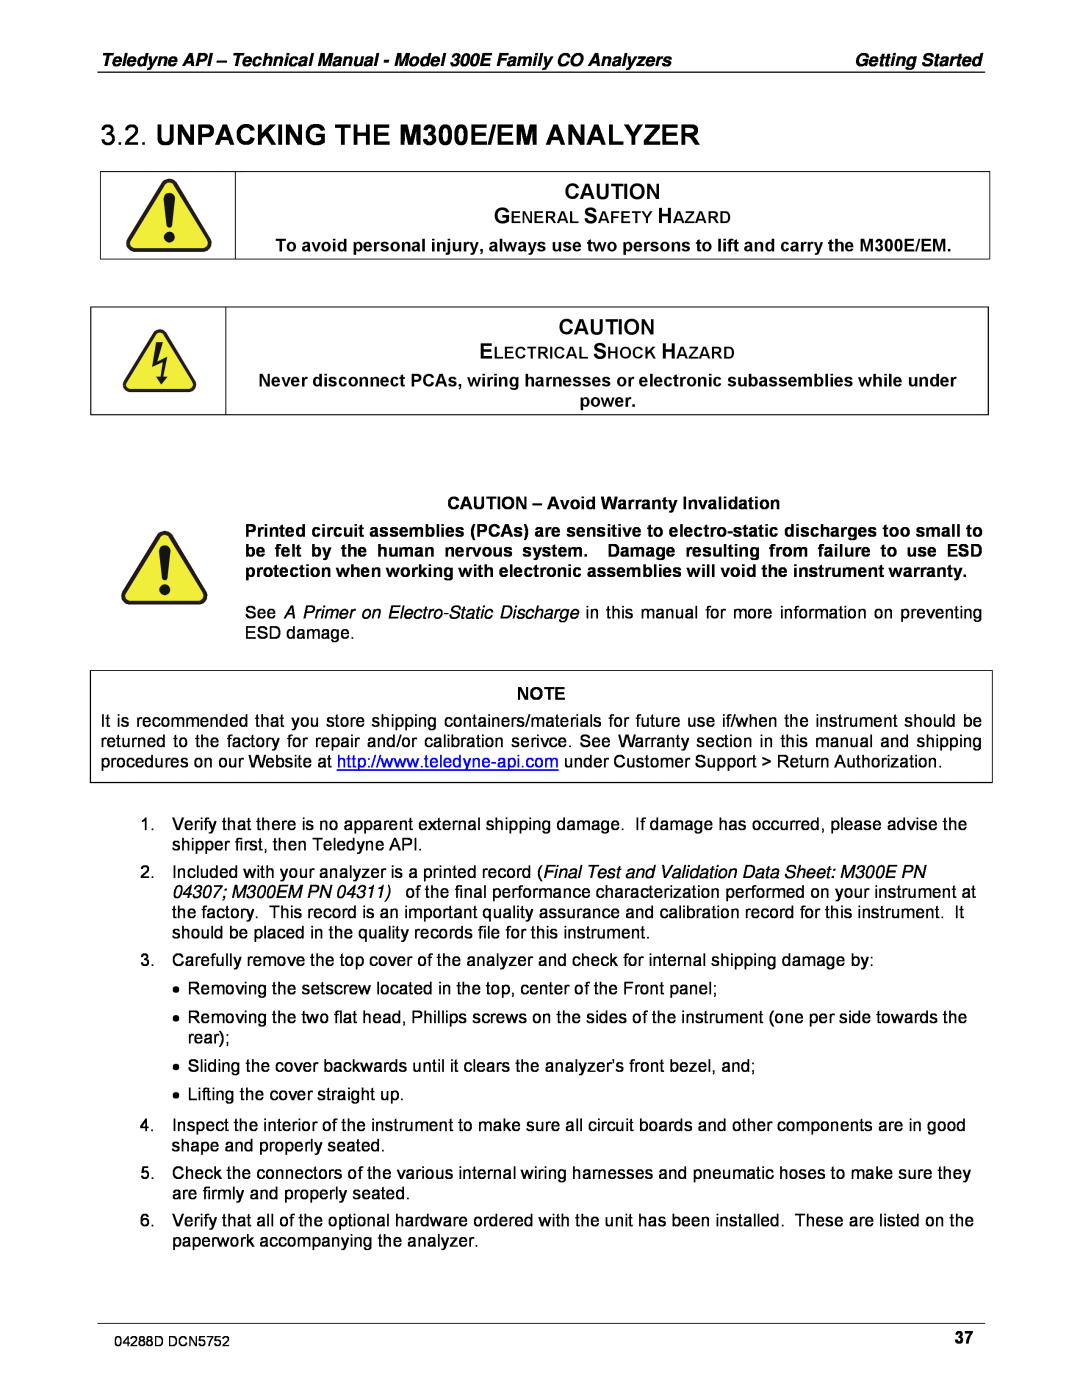 Teledyne M300EM operation manual UNPACKING THE M300E/EM ANALYZER, General Safety Hazard, Electrical Shock Hazard 